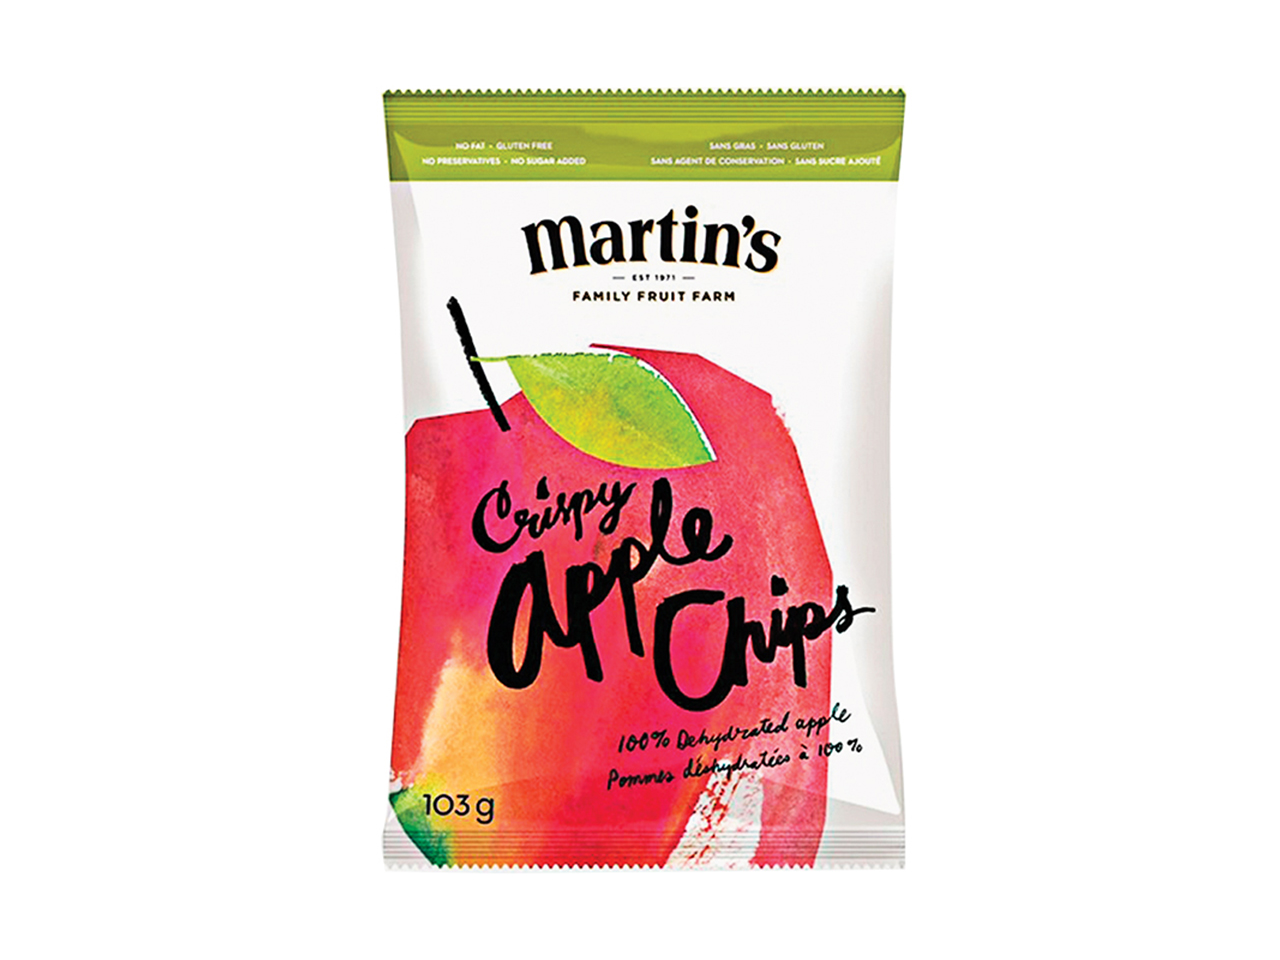 a bag of martin